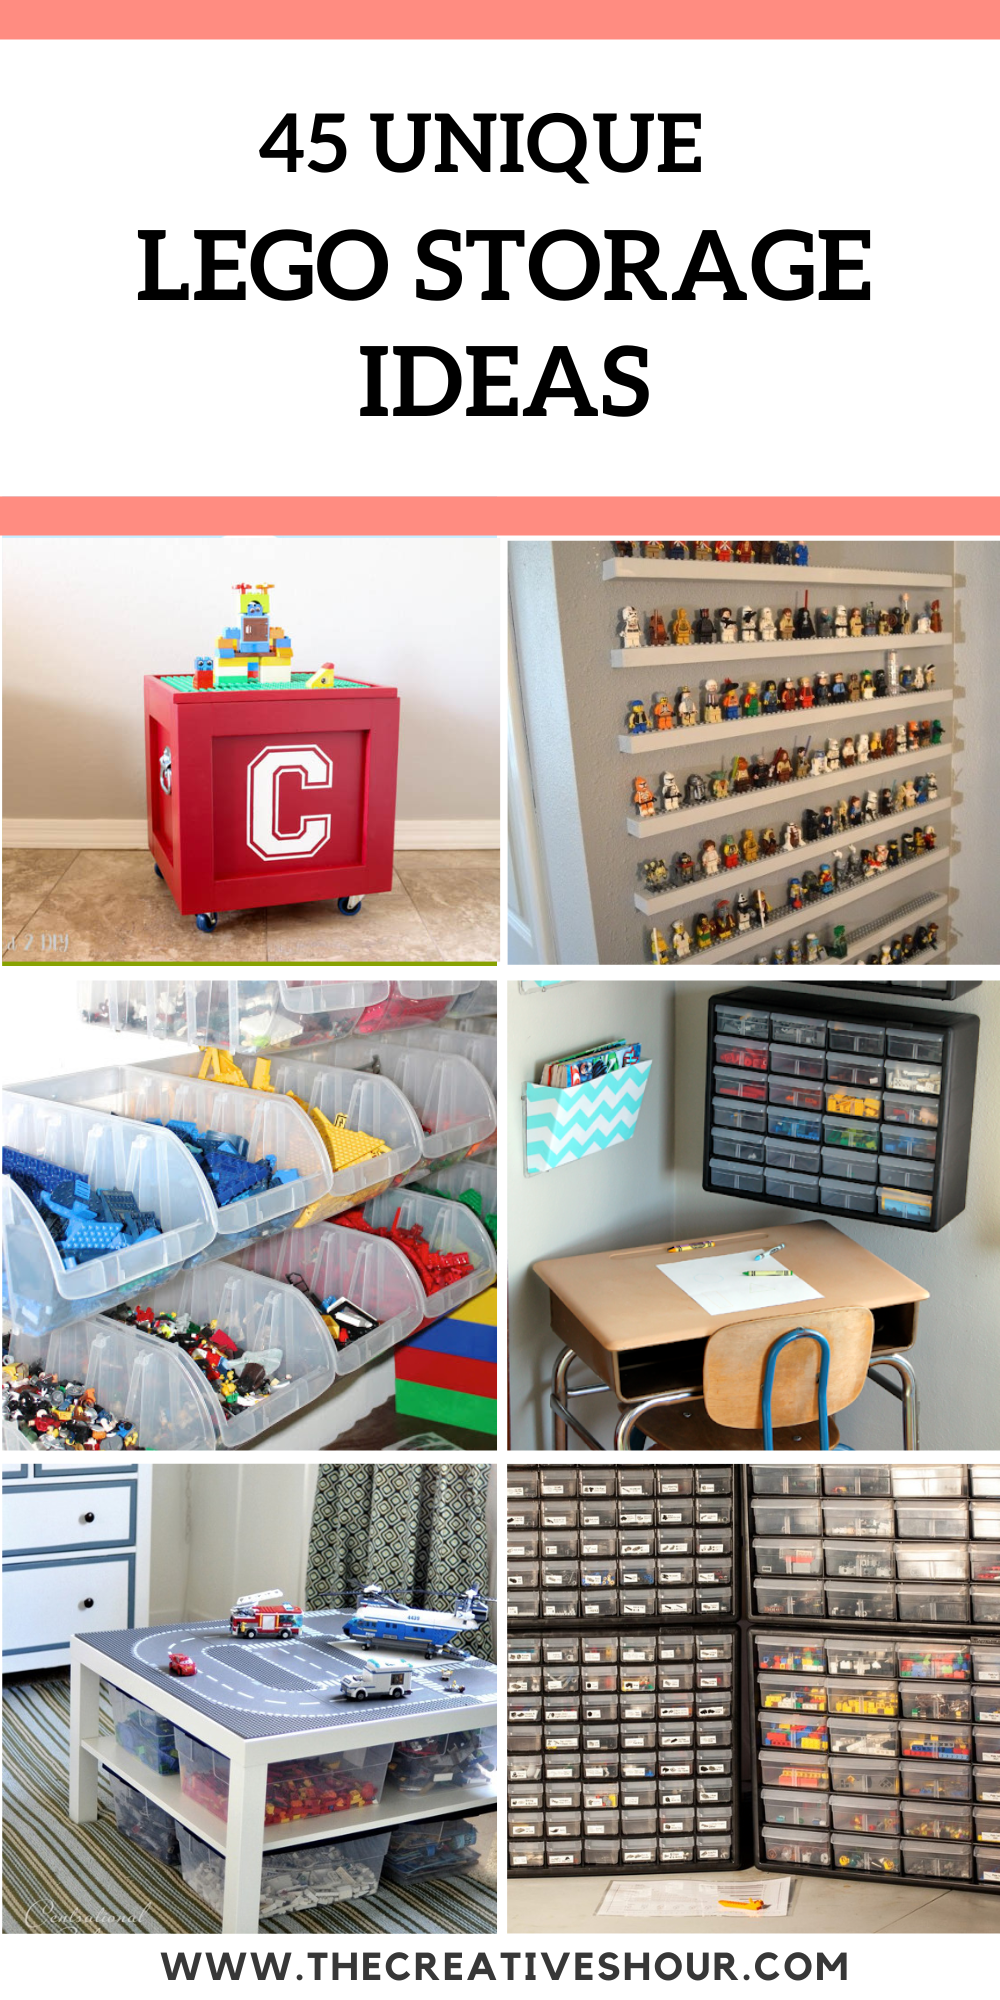 12 Creative Lego Storage Ideas